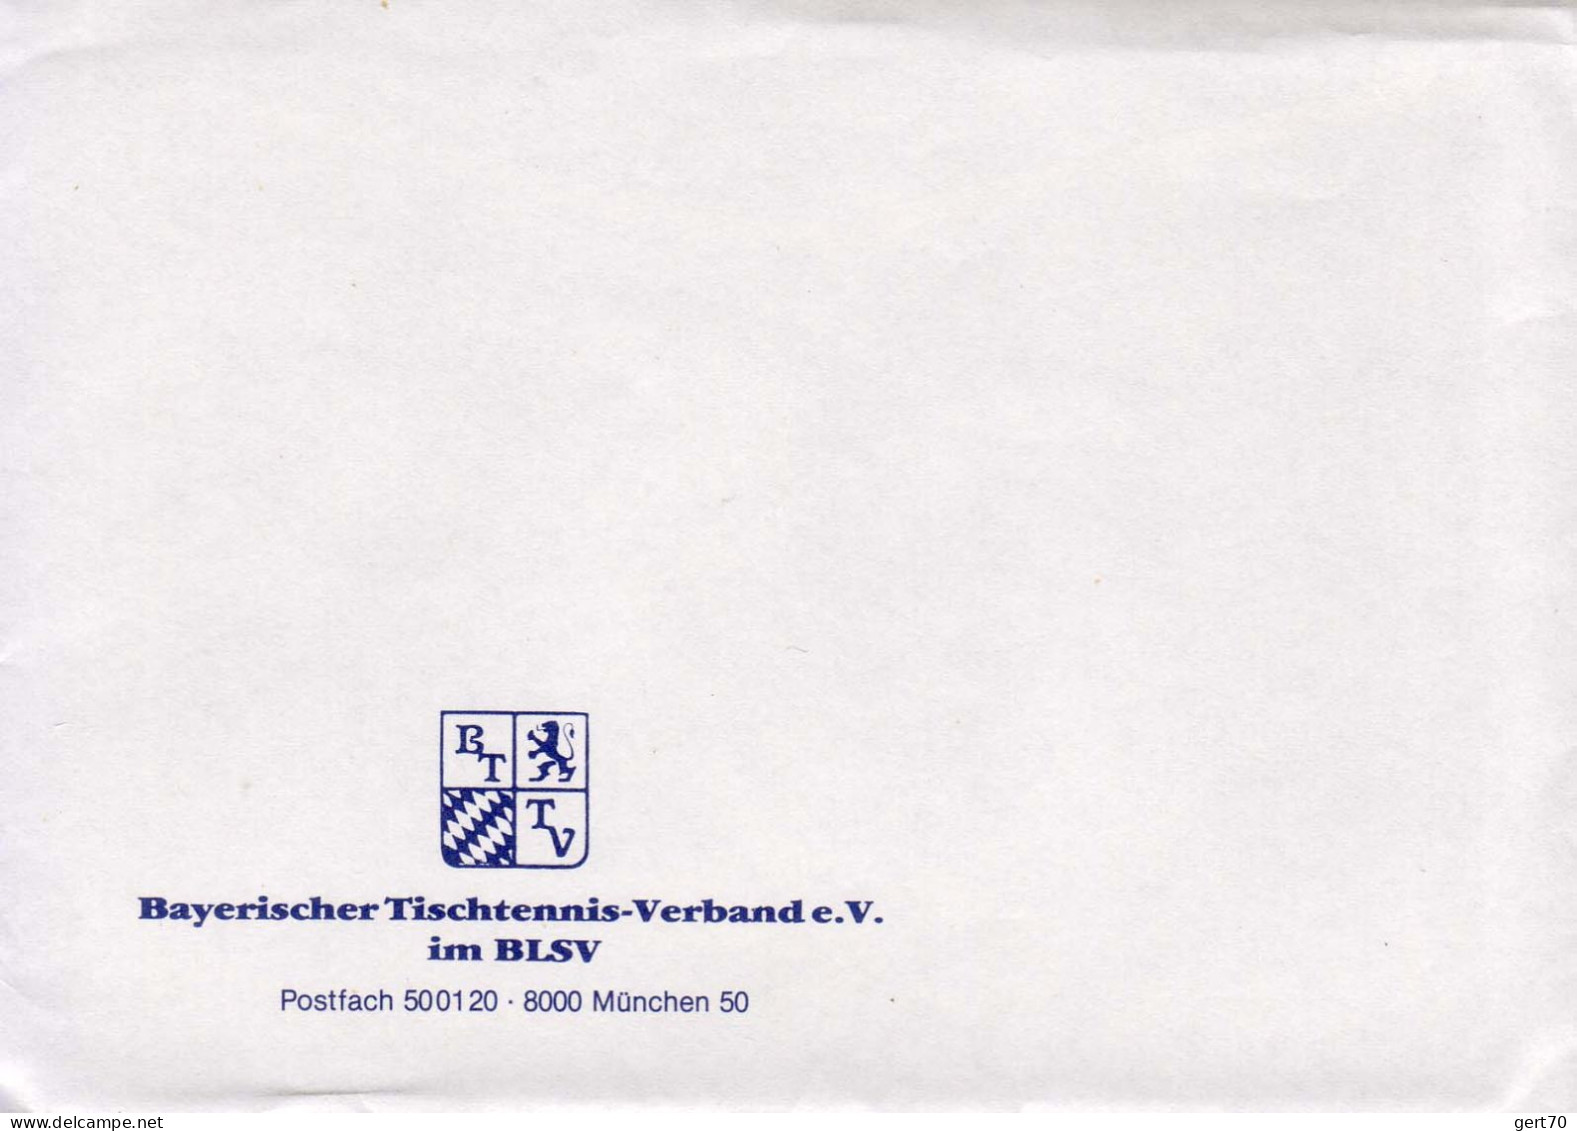 Germany / Allemagne, Mint Cover + Postcard / Enveloppe Vierge + Carte Postale / Bayerischer TTV - Tennis De Table